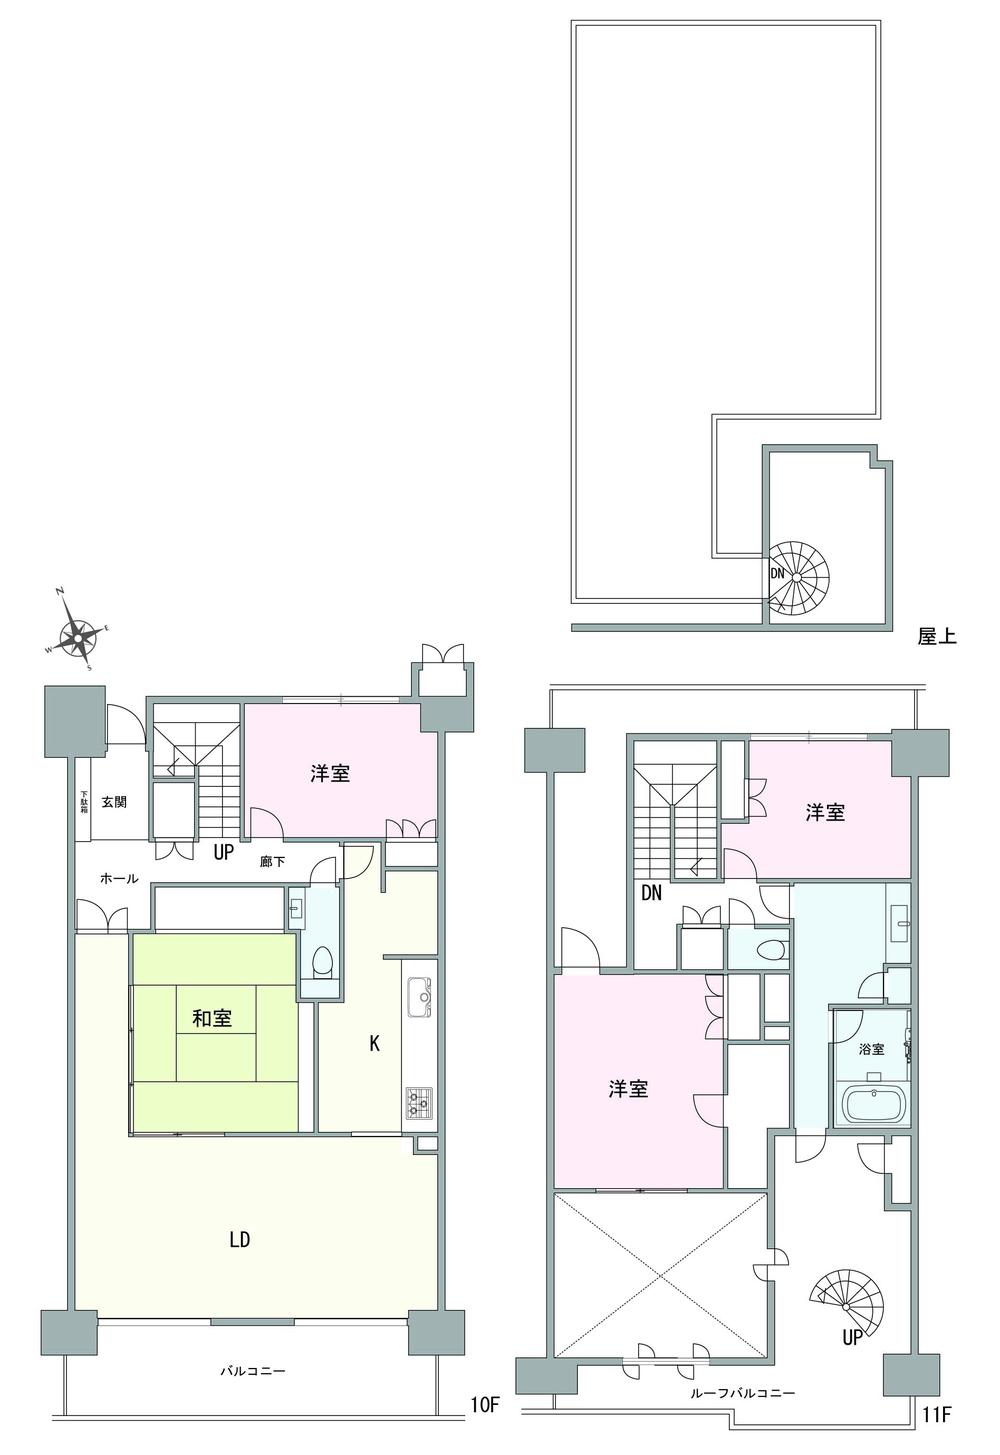 Floor plan. 4LDK, Price 17.8 million yen, Footprint 136.67 sq m